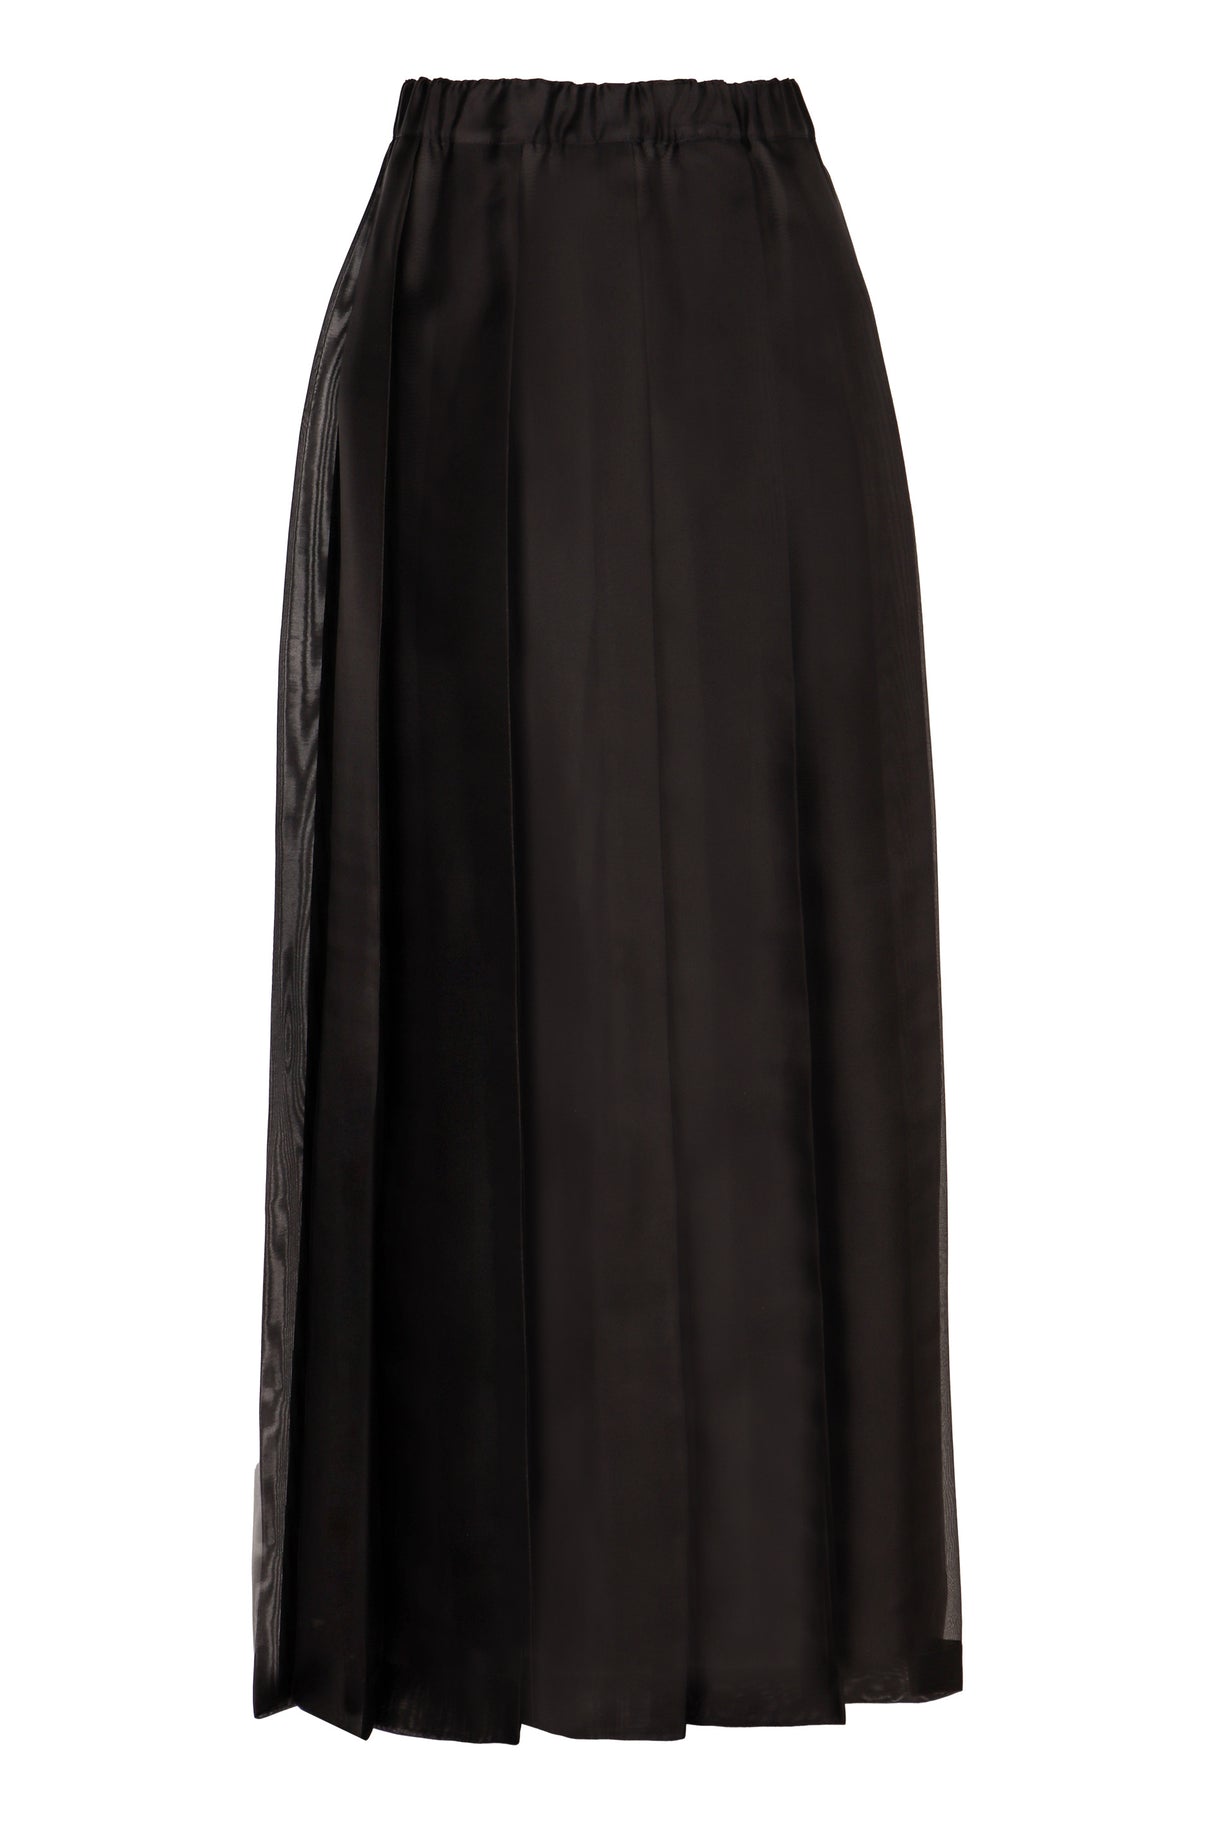 FABIANA FILIPPI Black Silk Midi Skirt with Elastic Waistband and Pleated Detail for Women